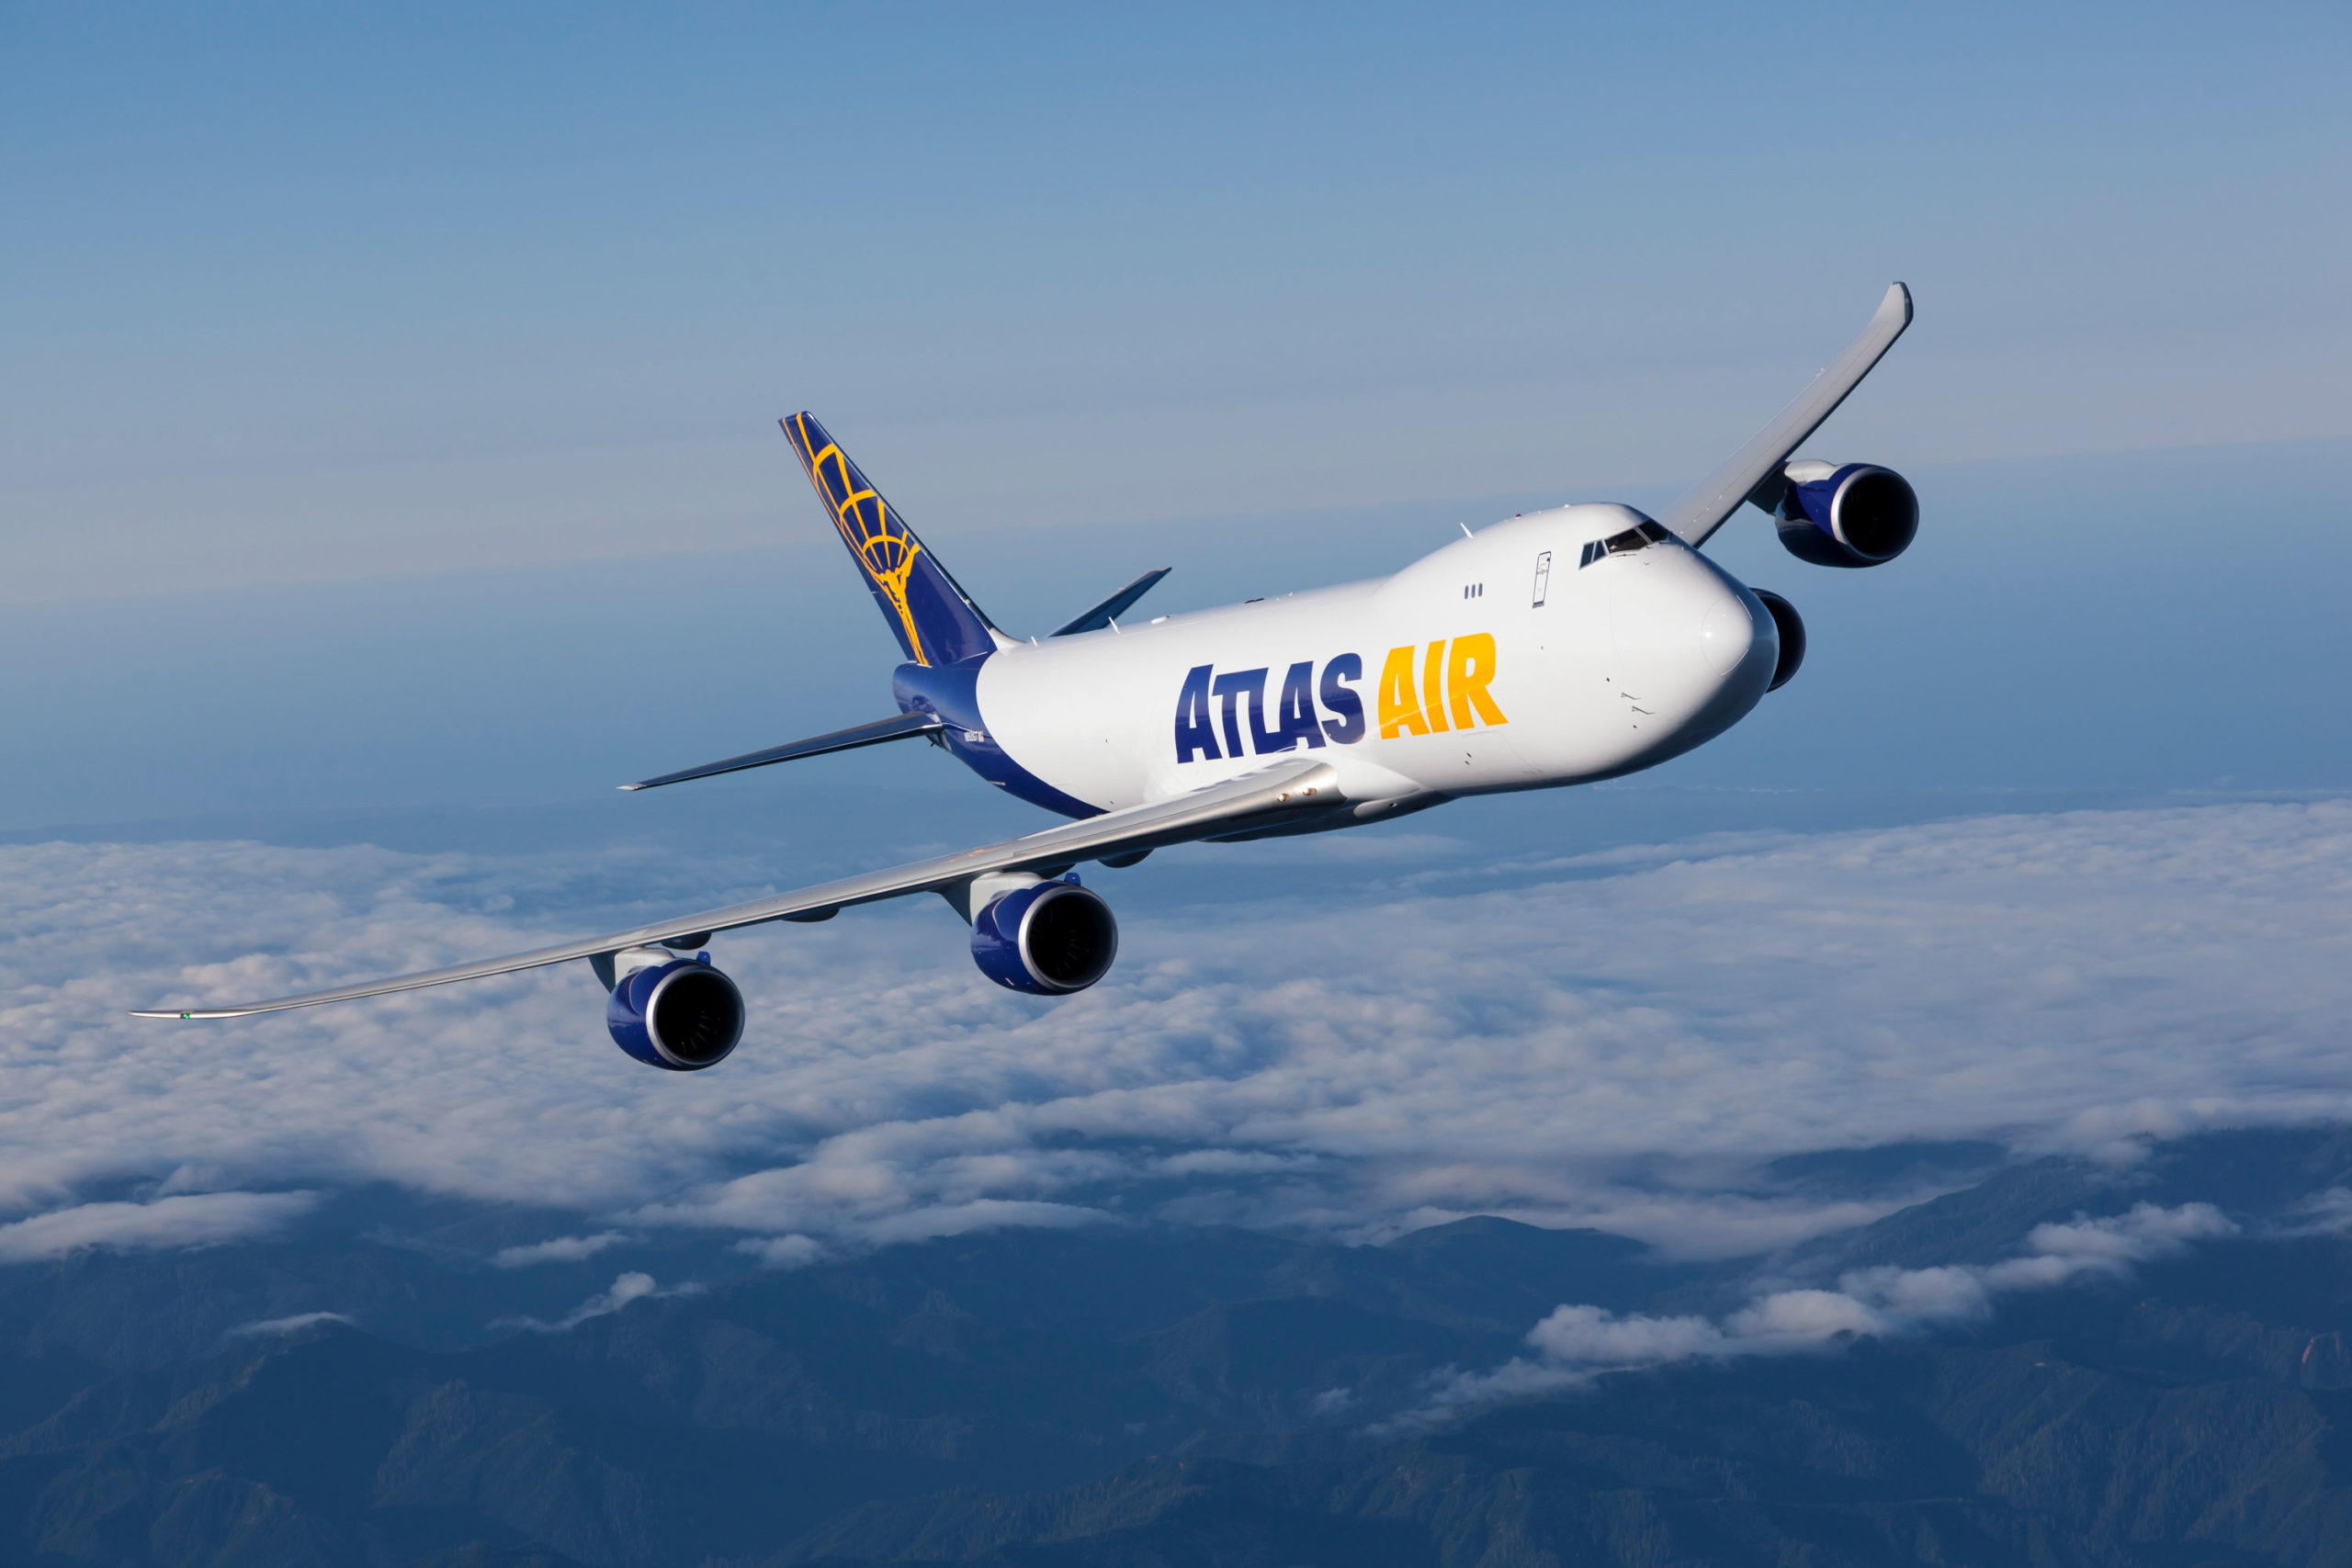 Shareholder sues to block $5.2B Atlas Air merger